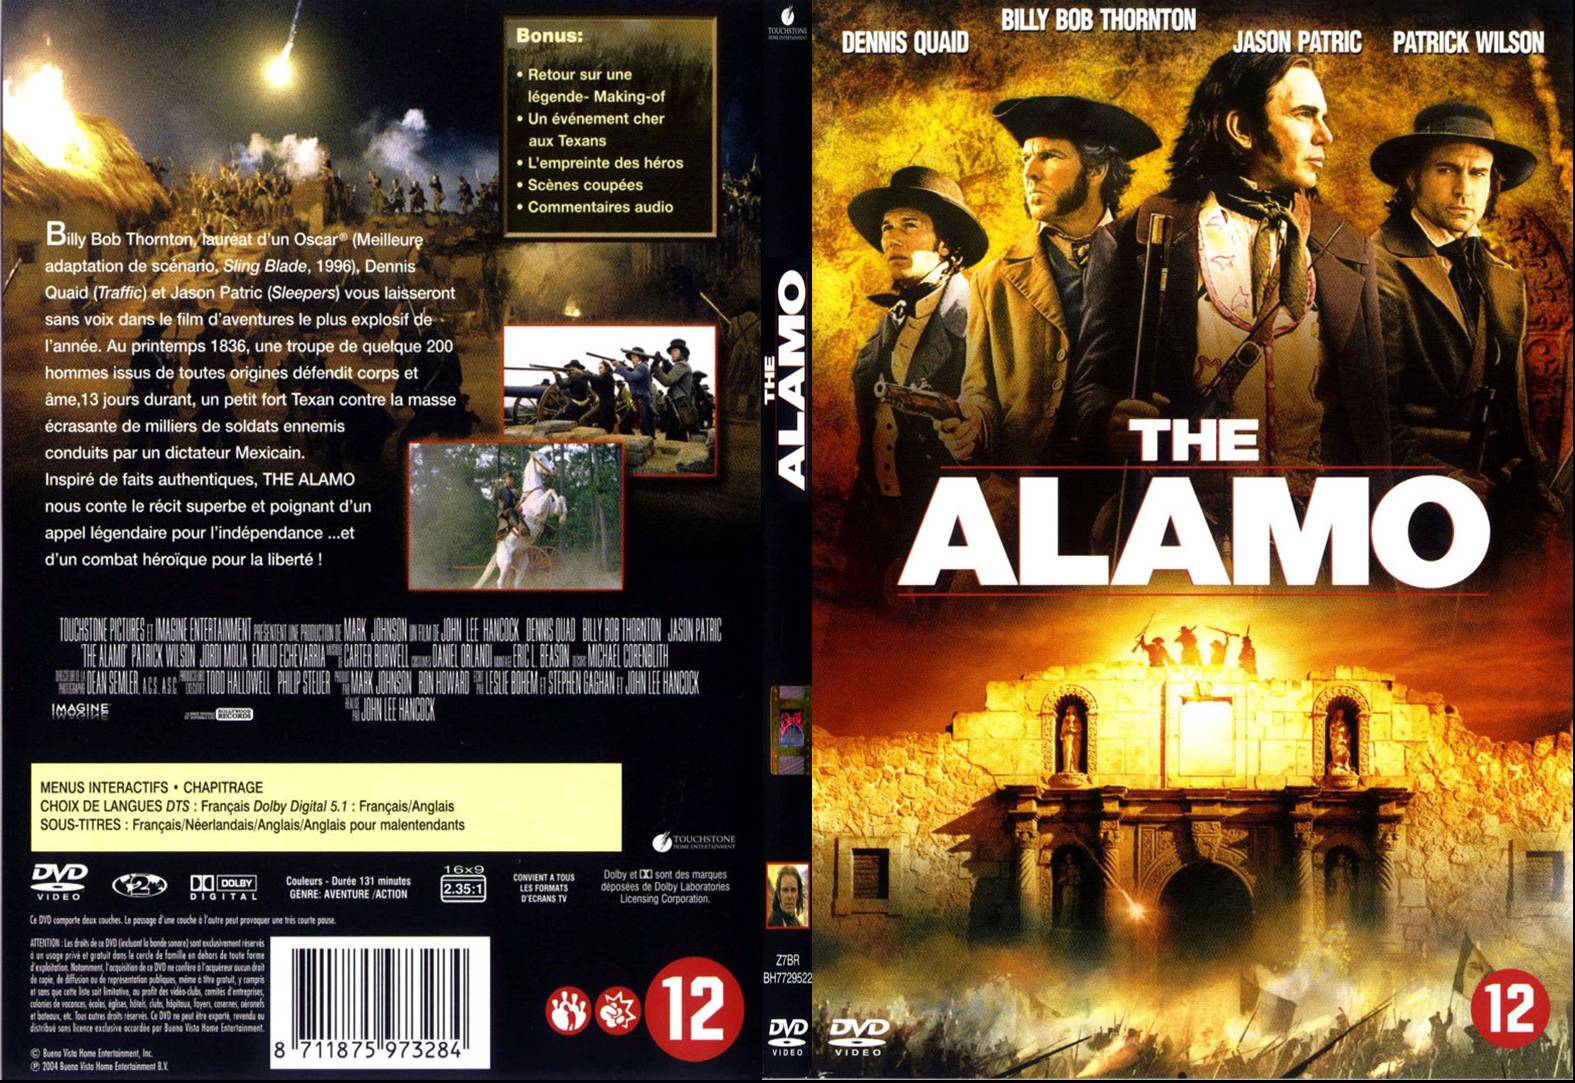 Jaquette DVD Alamo 2004 - SLIM